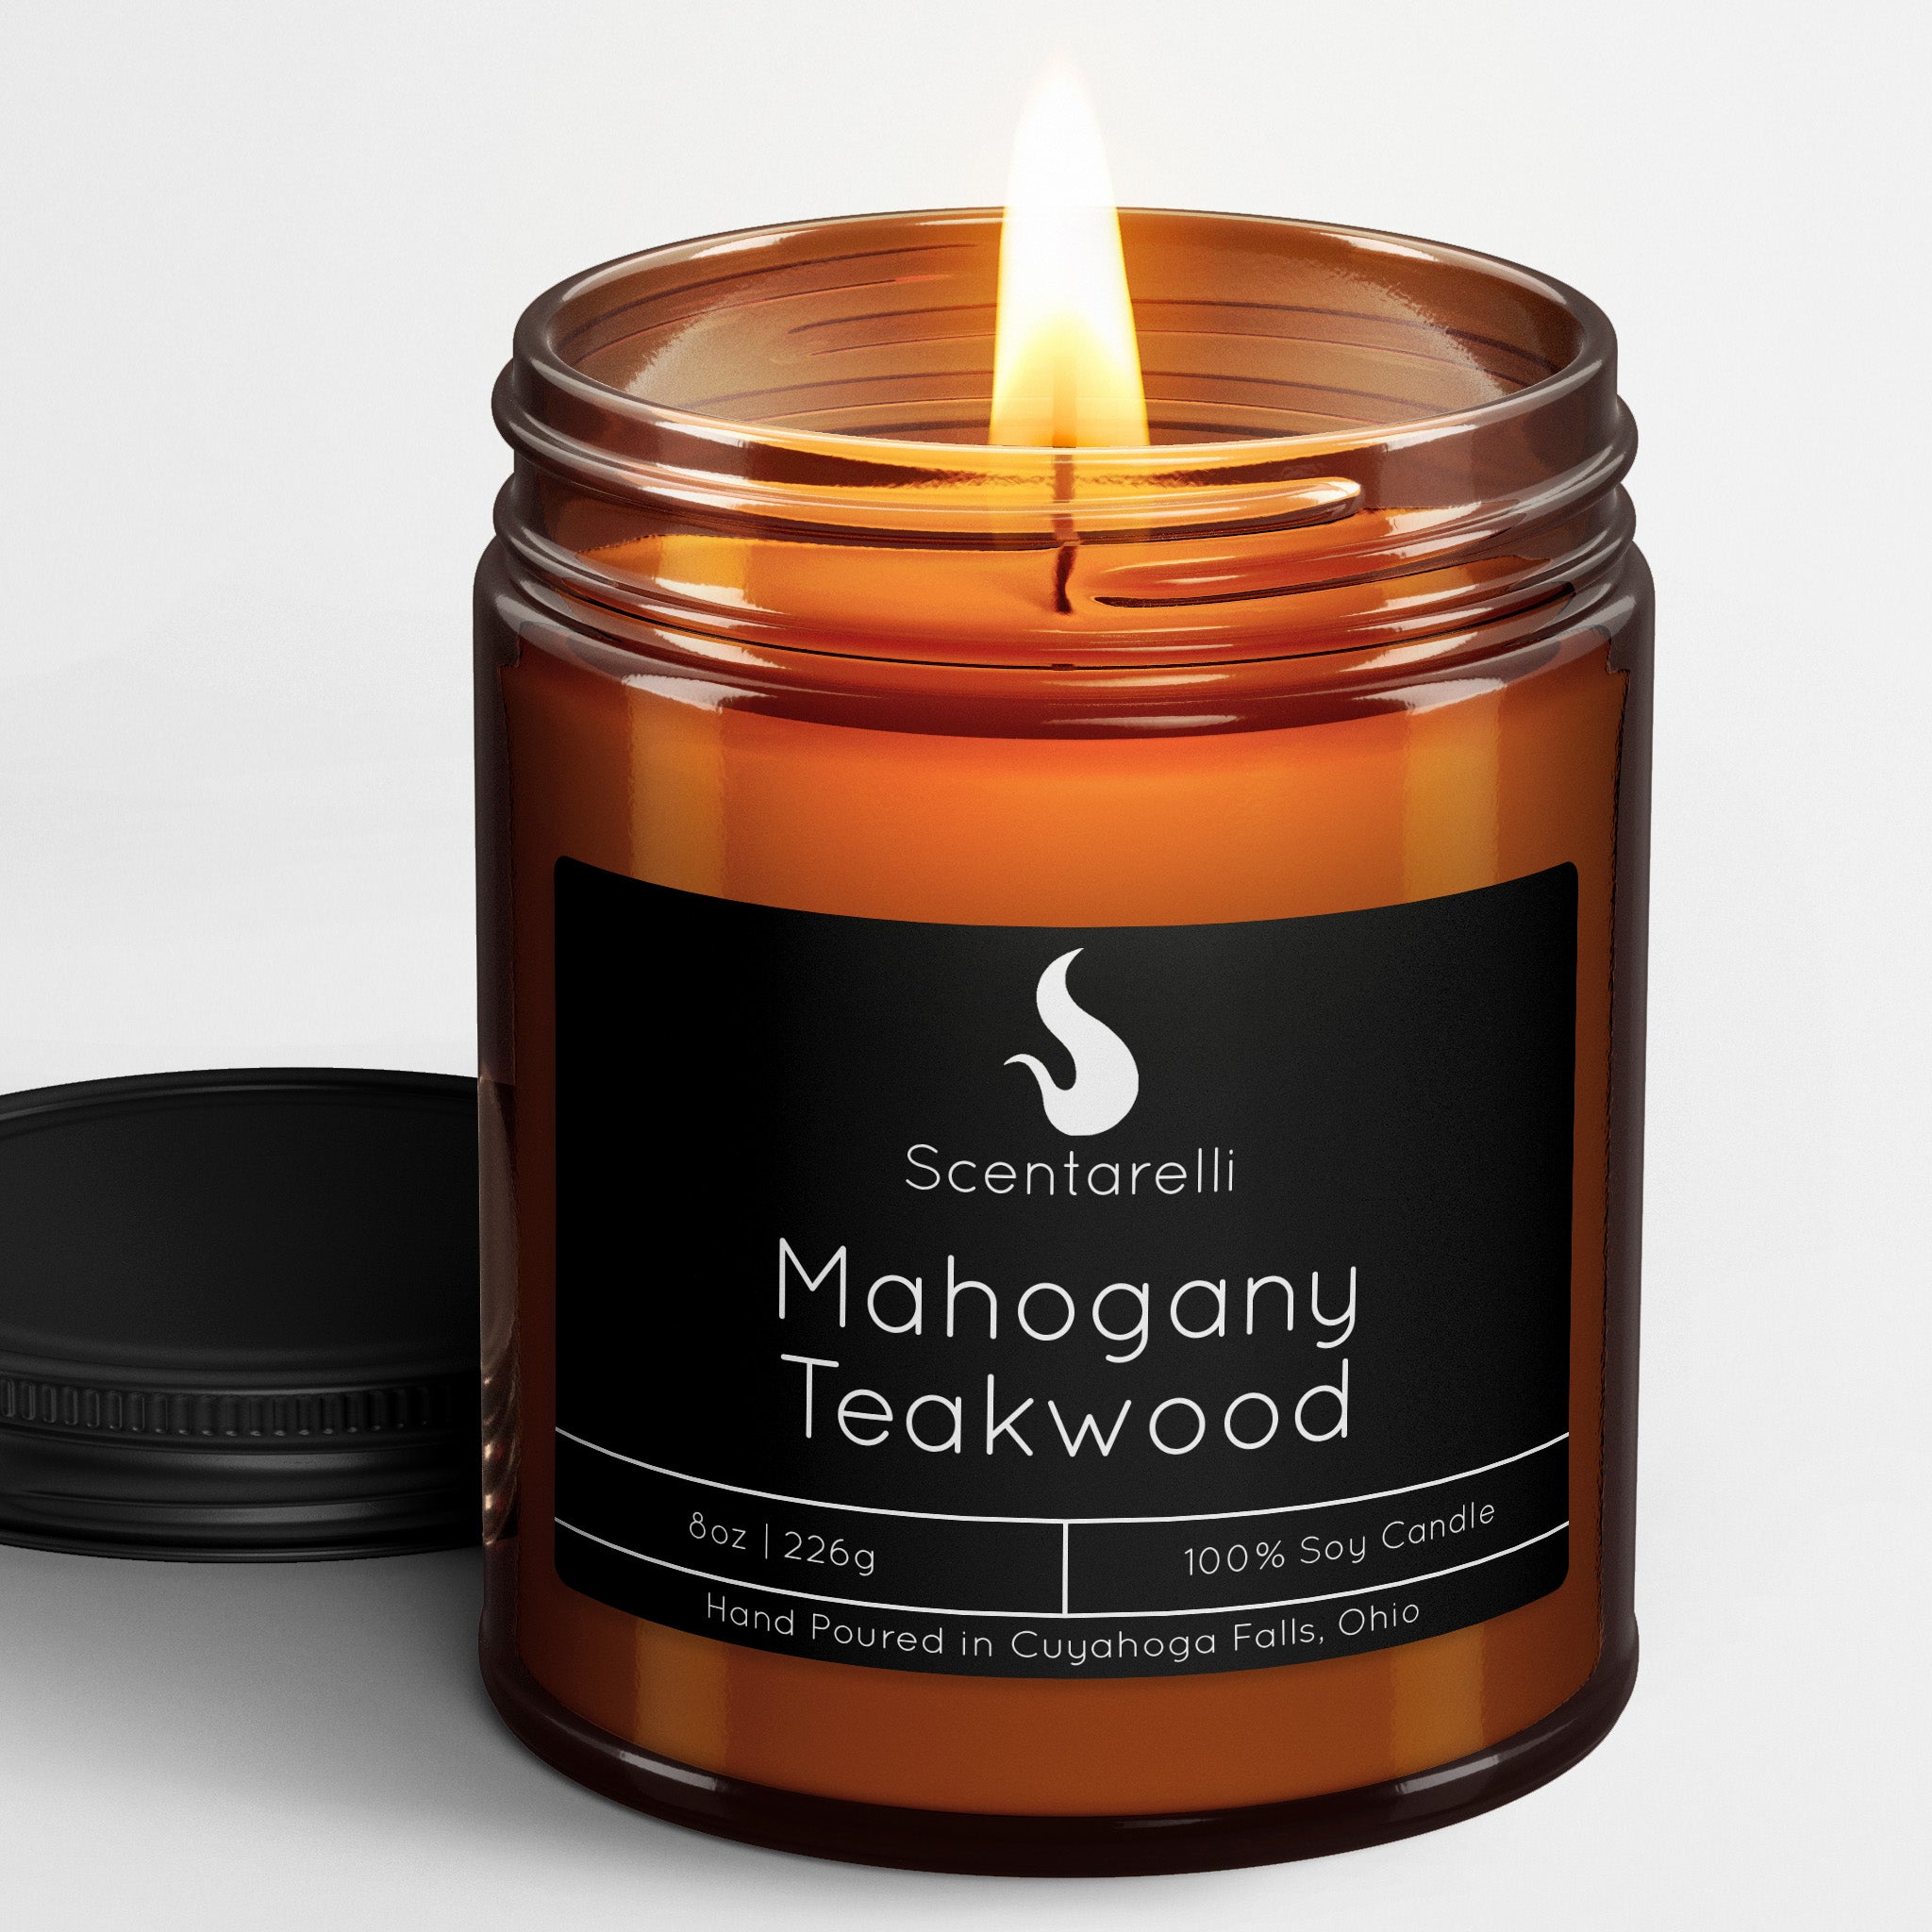 Mahogany-Teakwood – Mandle Candle Co